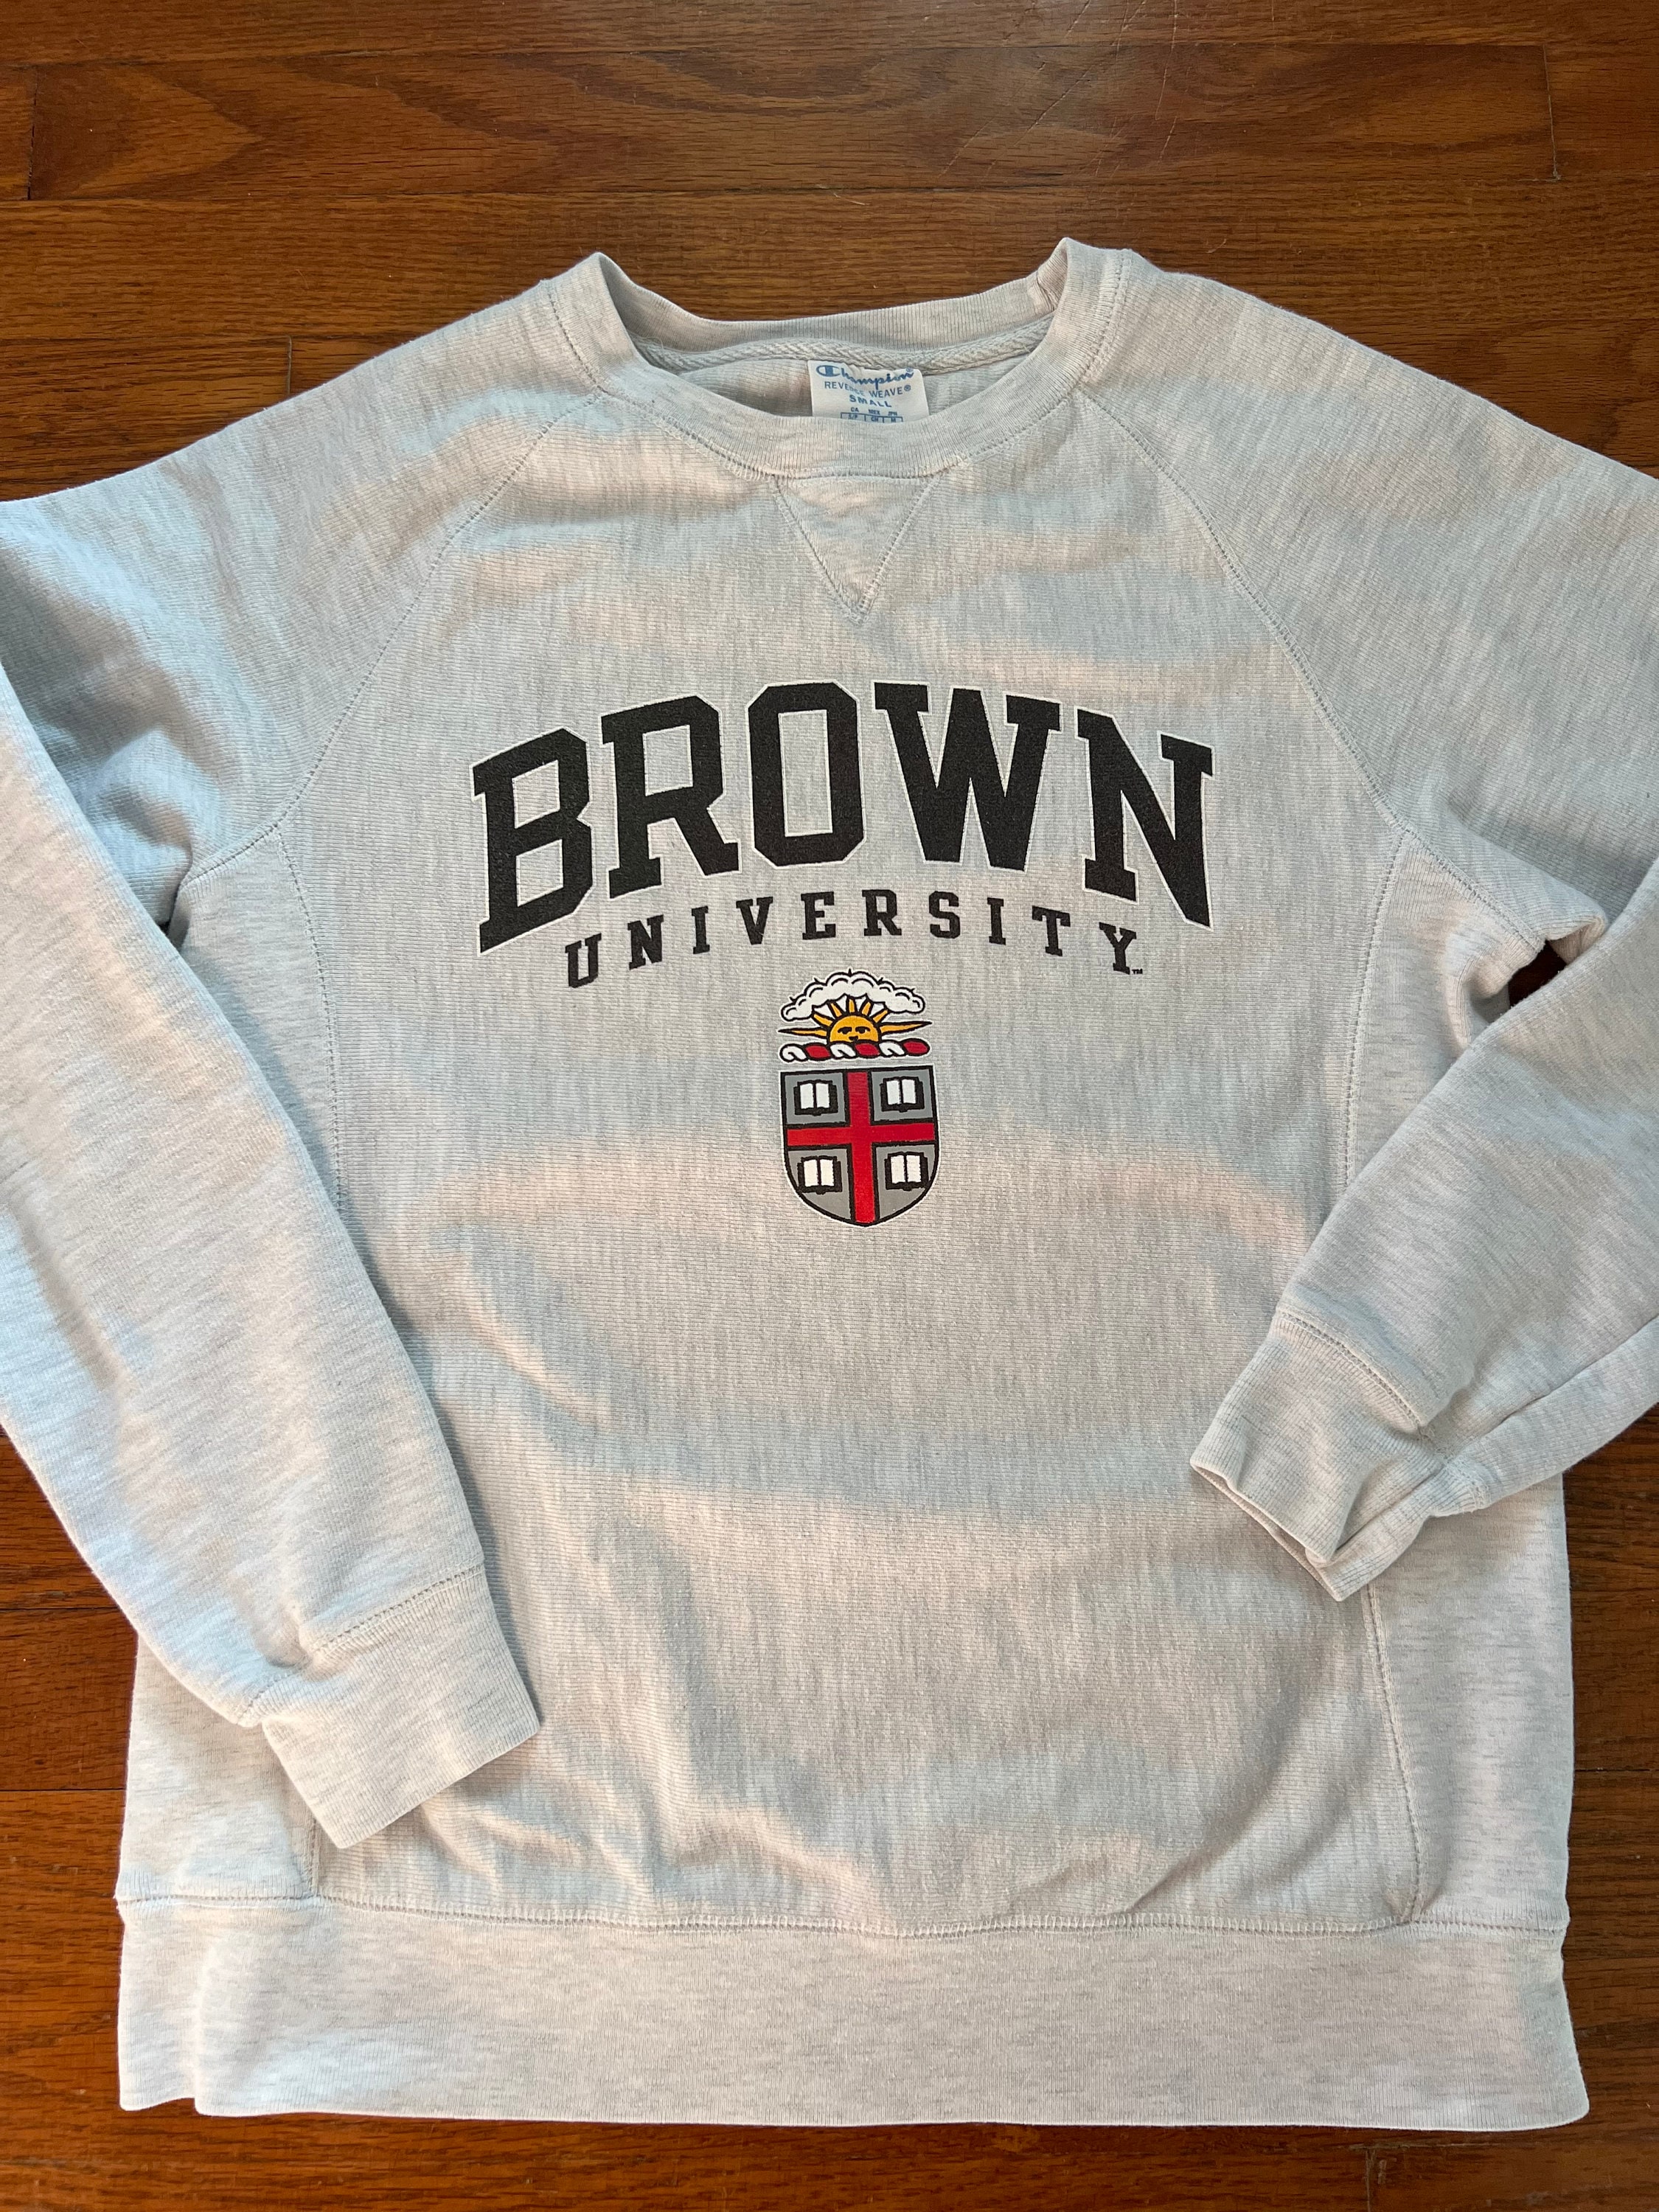 Brown University Shirt | peacecommission.kdsg.gov.ng